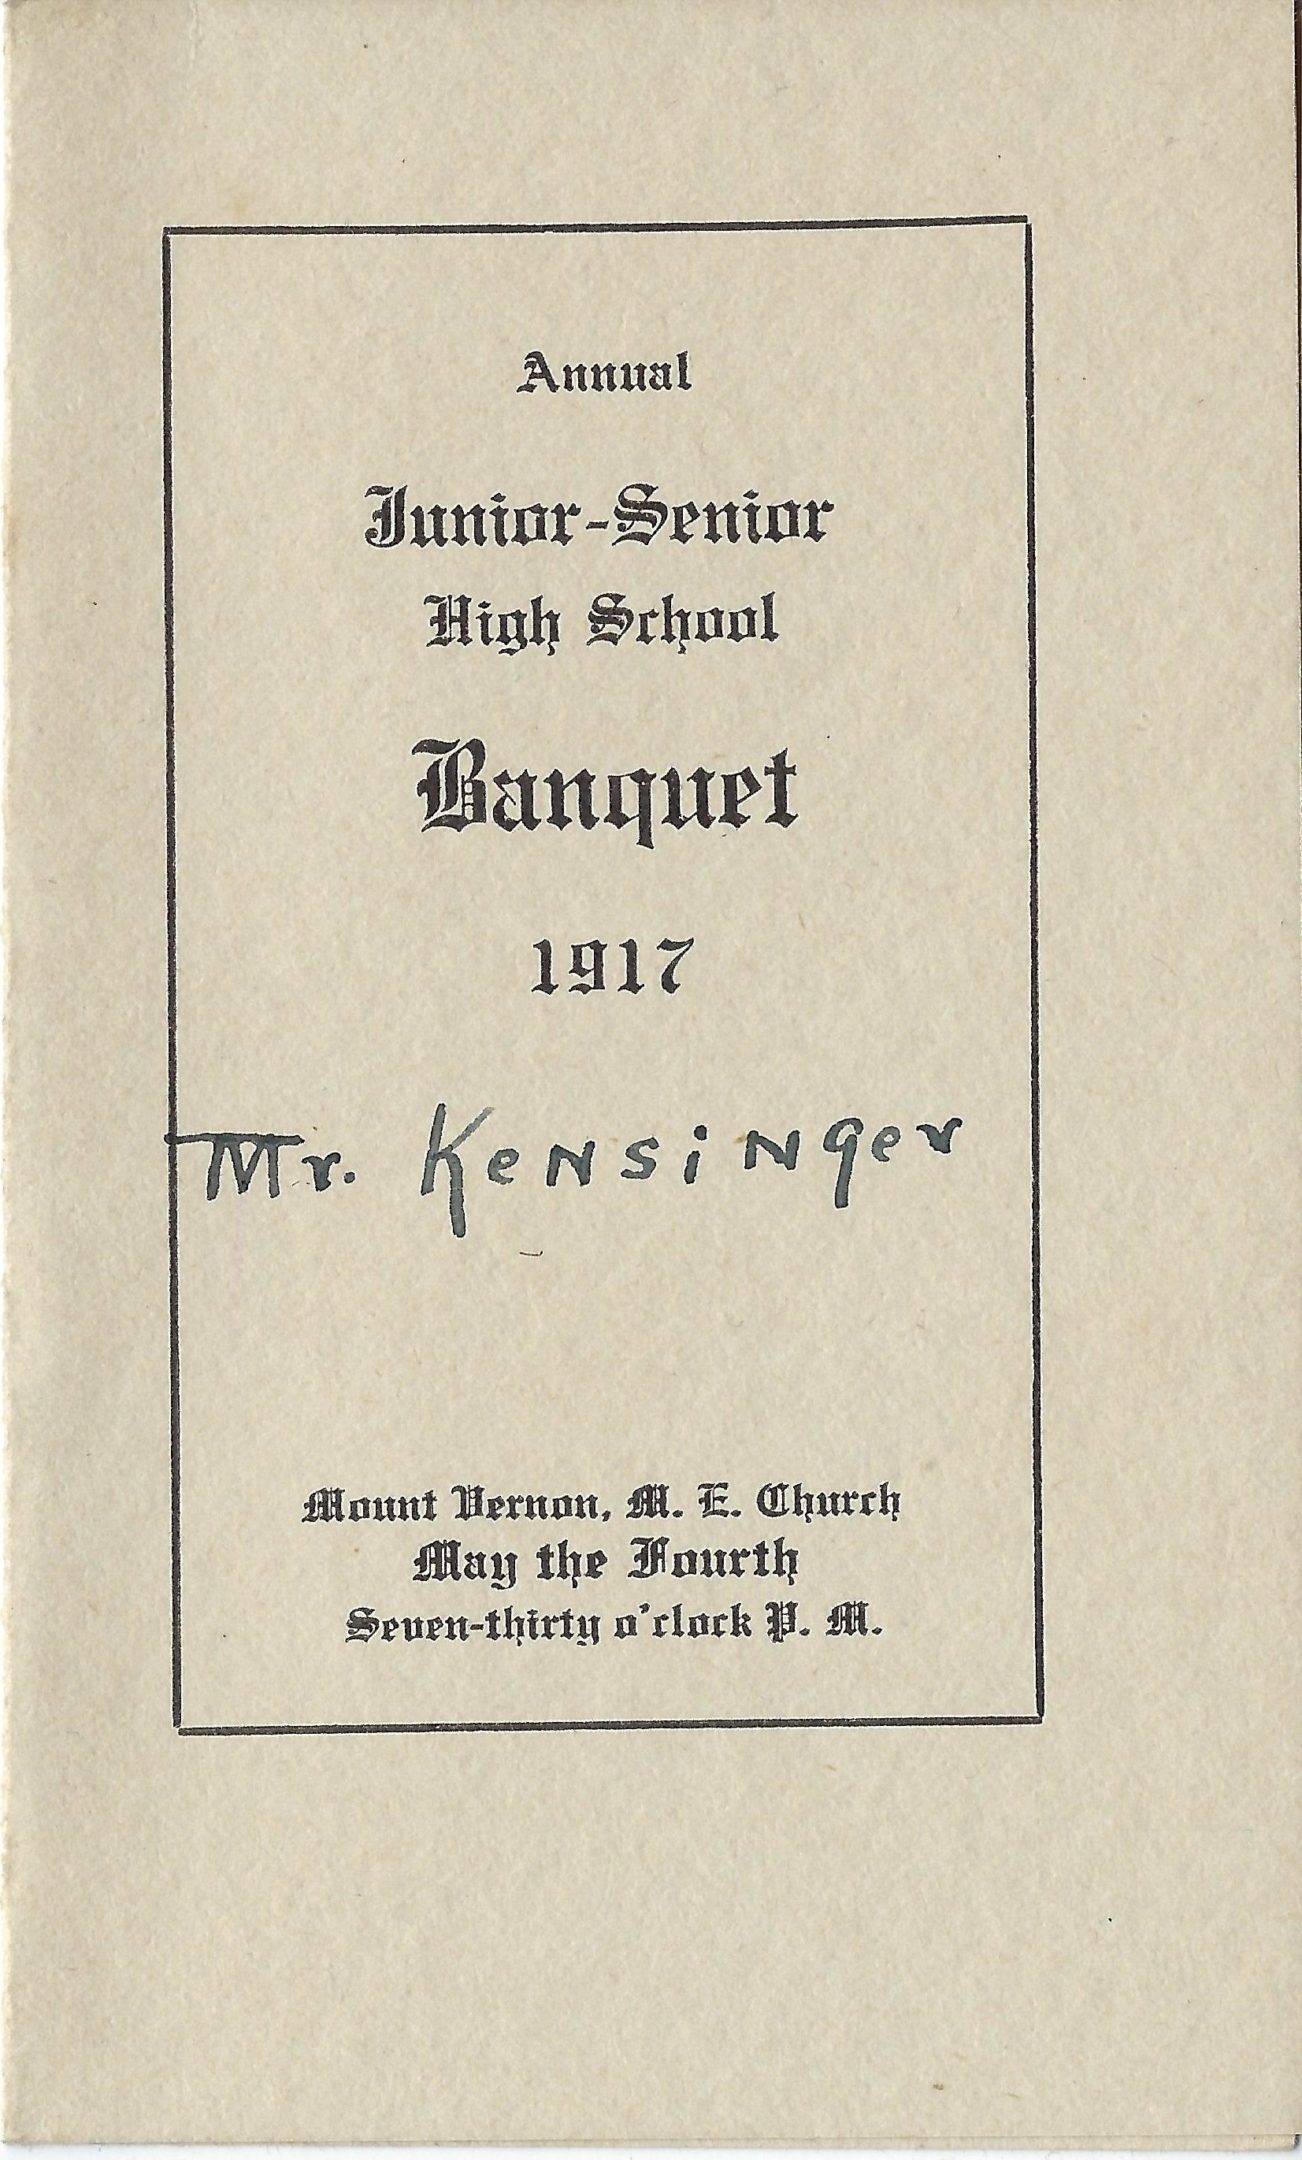 Photo of high school banquet 1917 menu